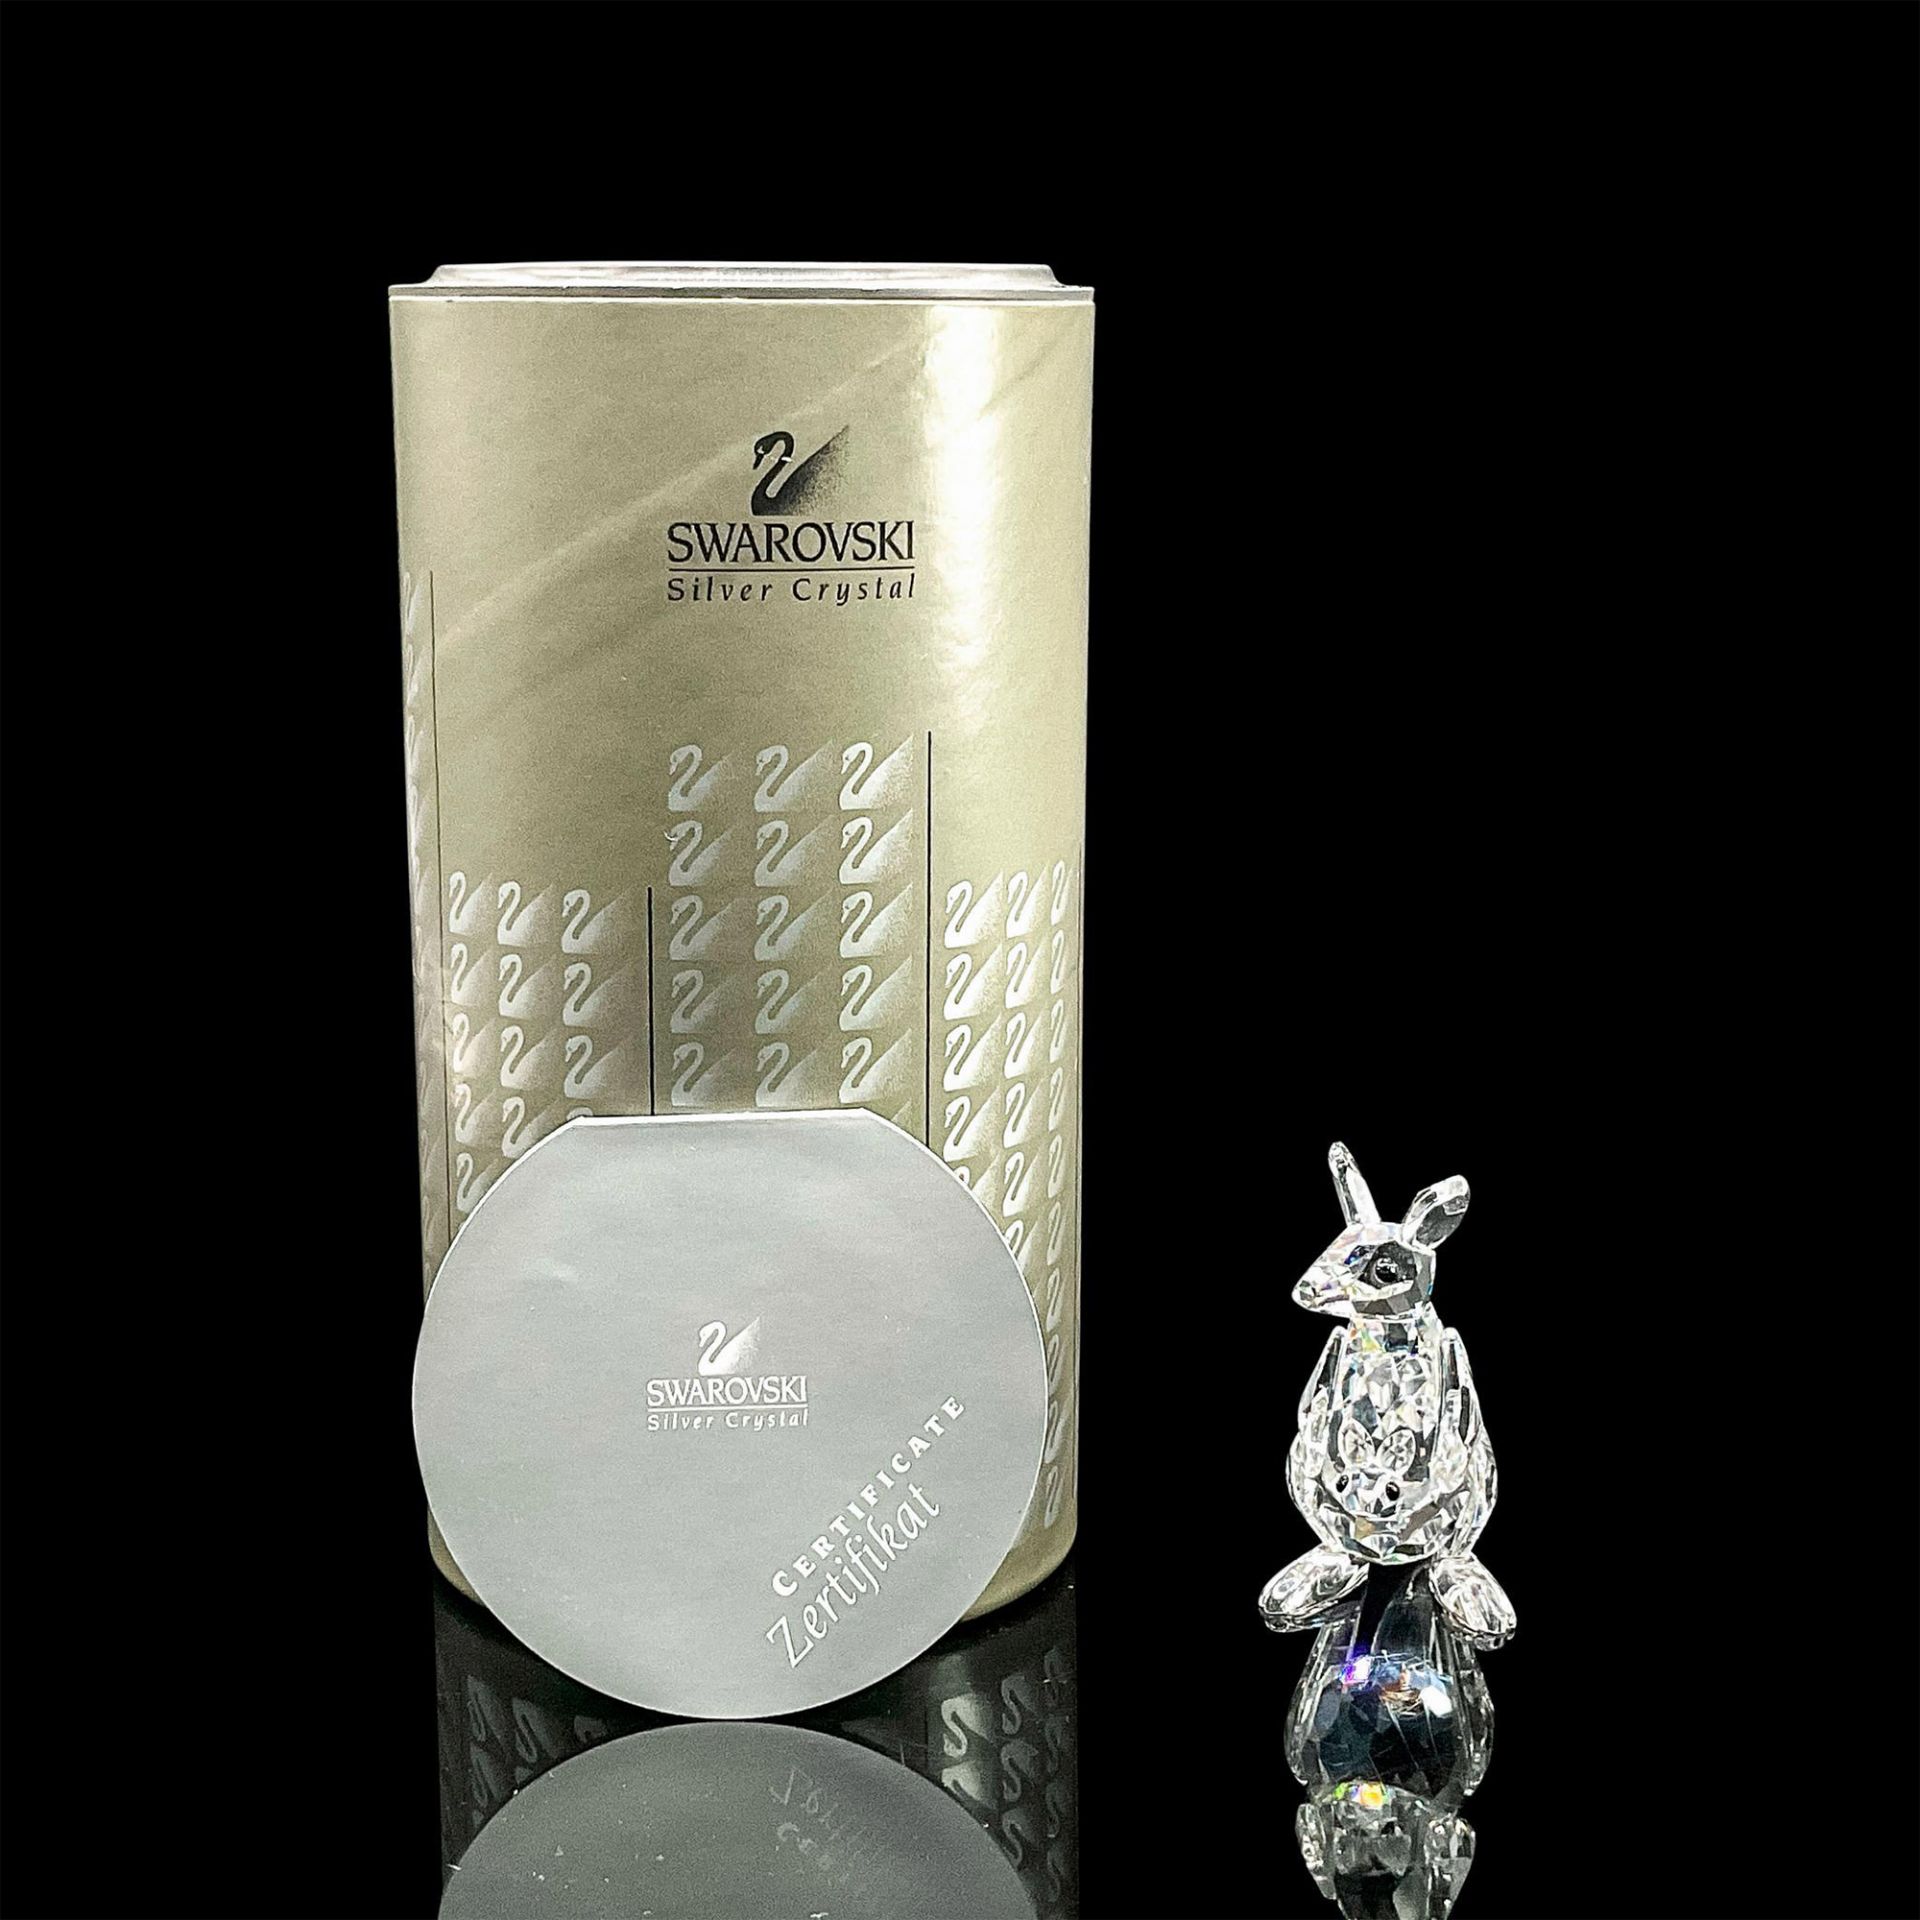 Swarovski Silver Crystal Figurine, Kangaroo with Baby Joey - Image 4 of 4